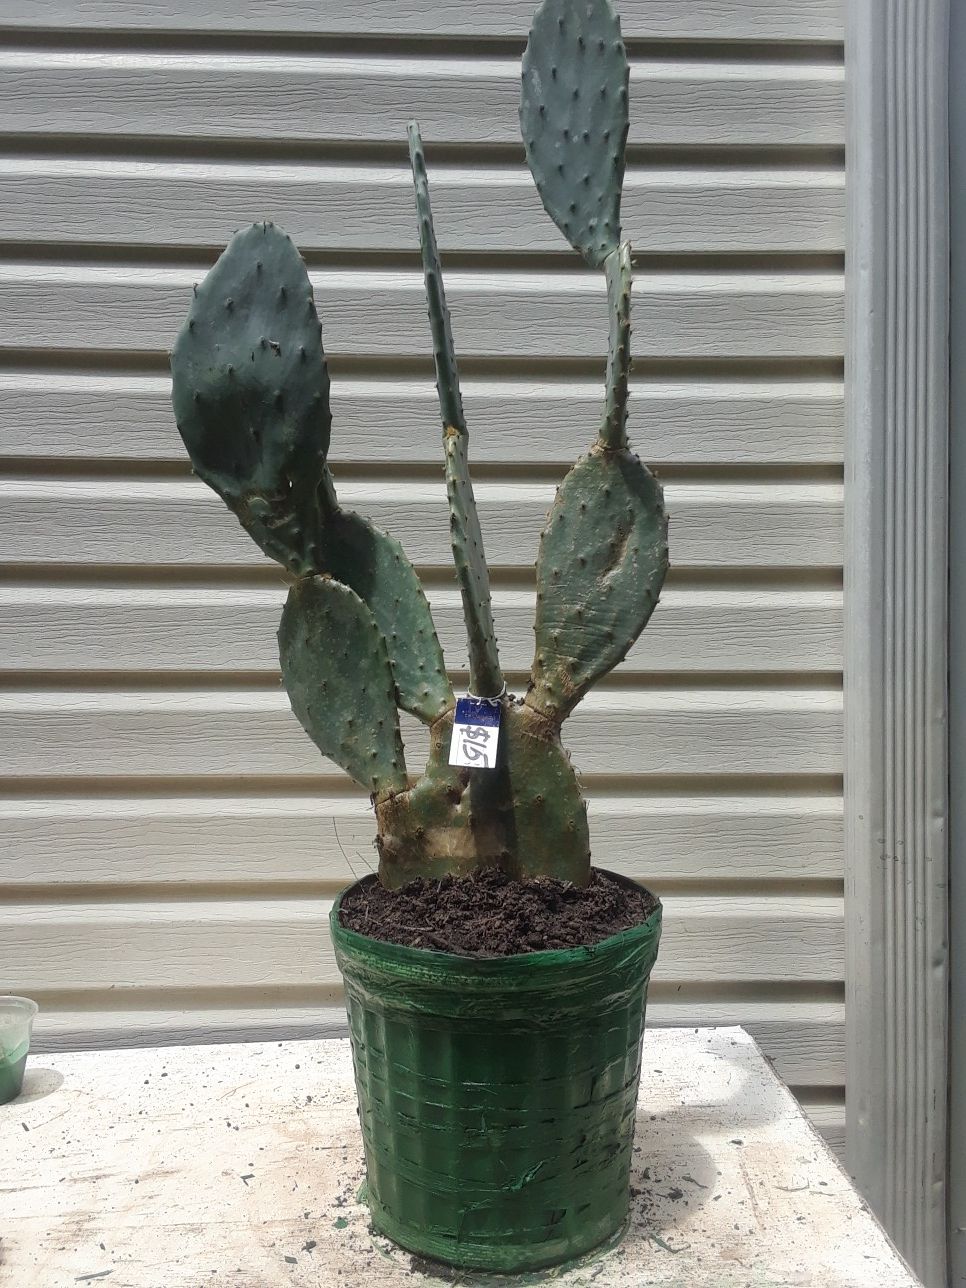 Giant size cactus plant